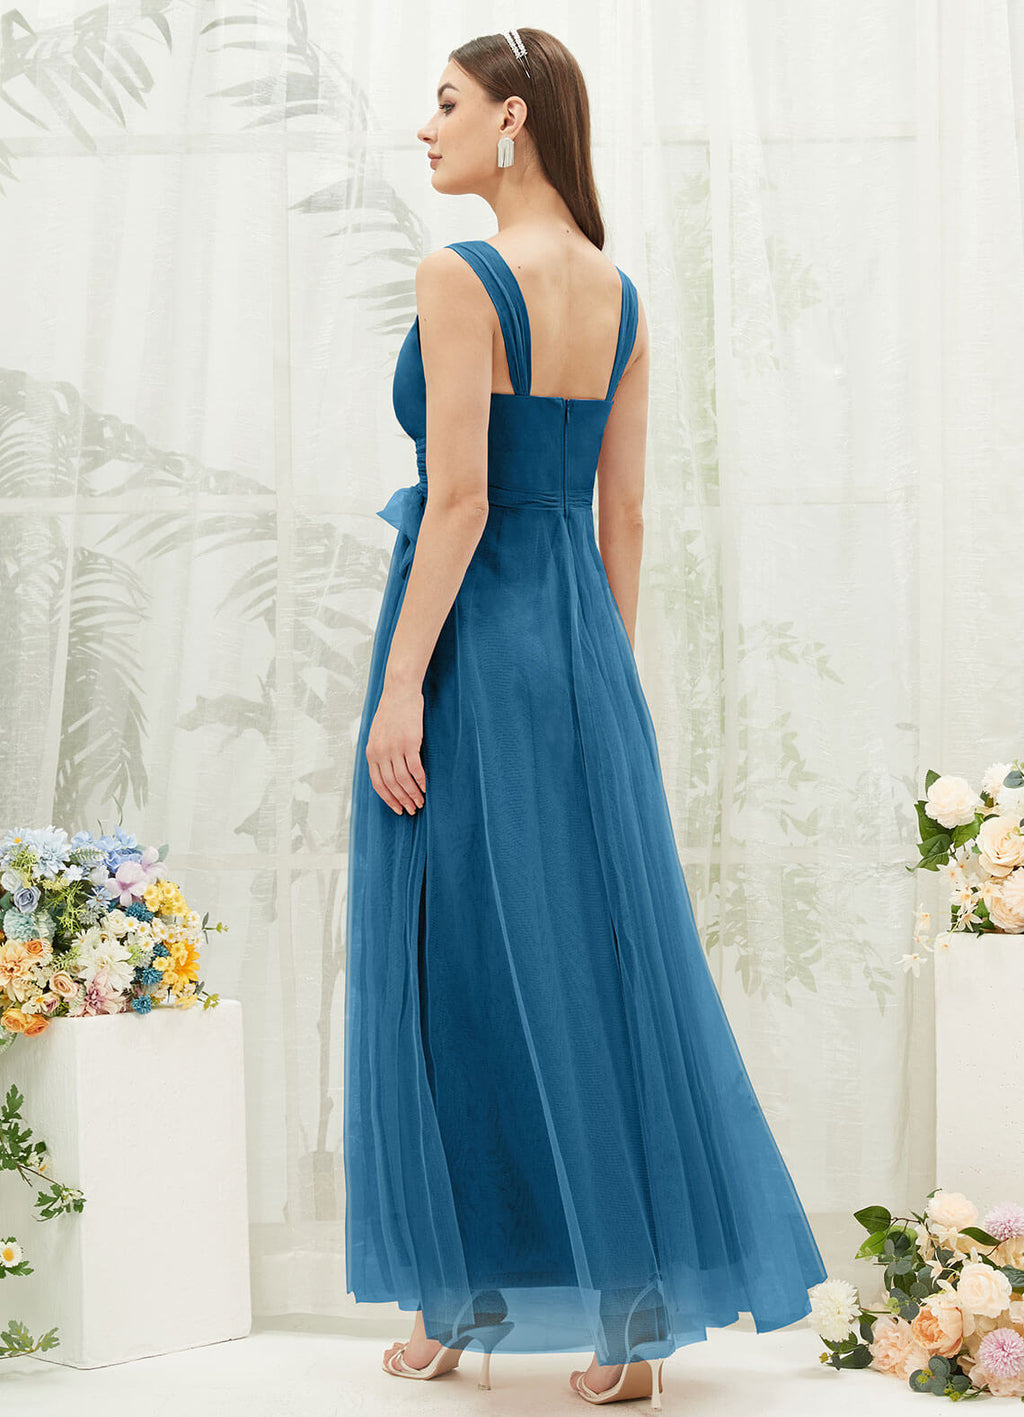 NZ Bridal Sleeveless Wrap Tulle Teal Flowy bridesmaid dresses 07303ep Yedda a